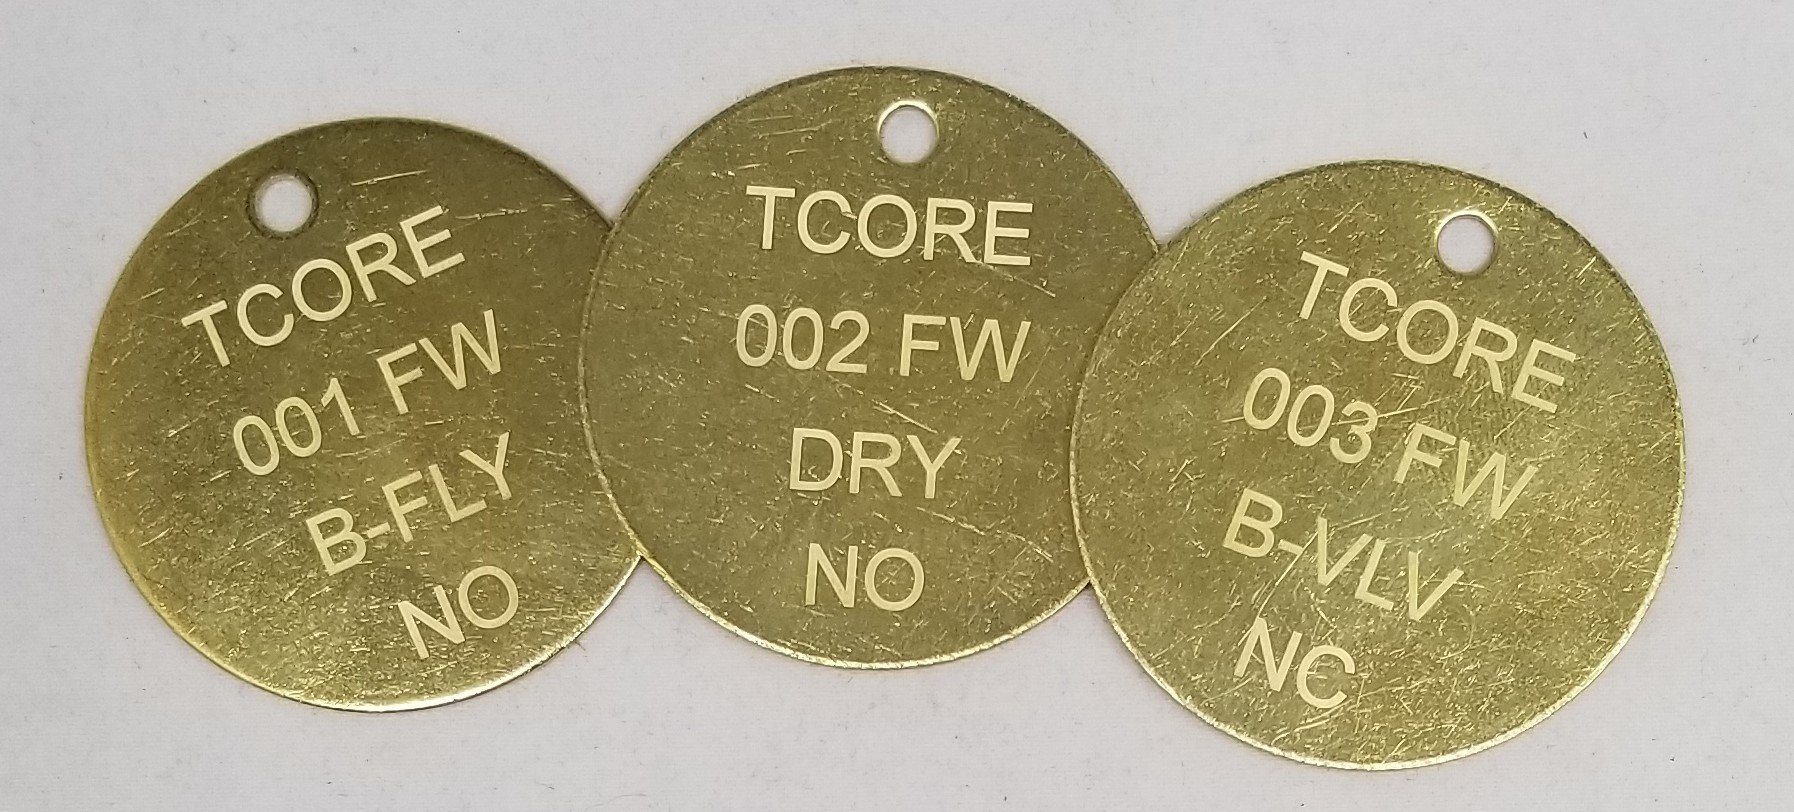 Brass Identification/Equipment Tags, Laser Marked 1 1/4